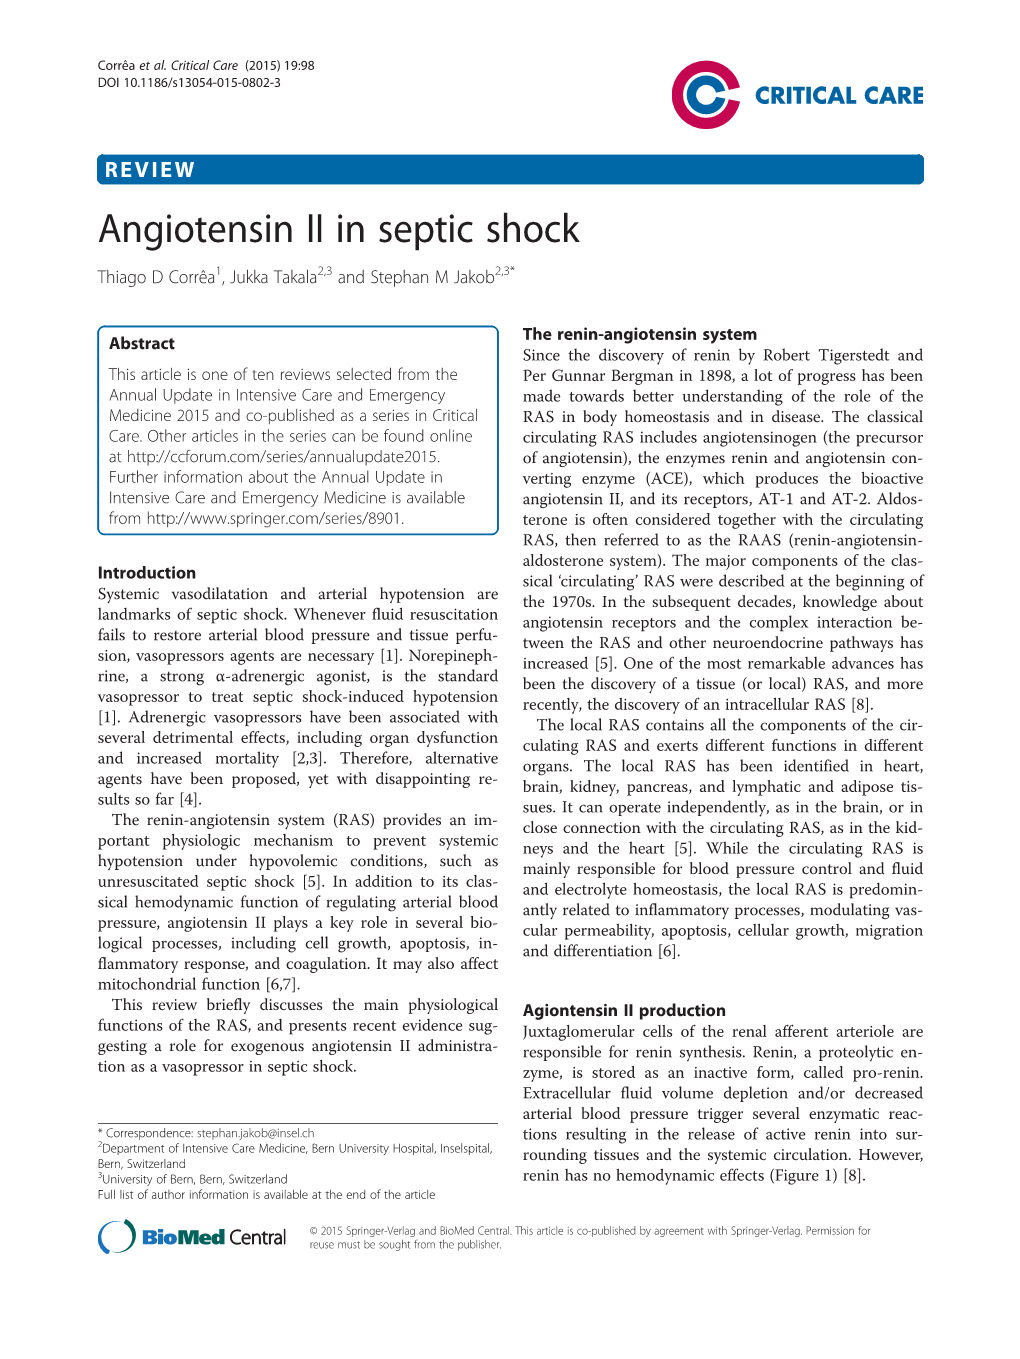 Angiotensin II in Septic Shock Thiago D Corrêa1, Jukka Takala2,3 and Stephan M Jakob2,3*